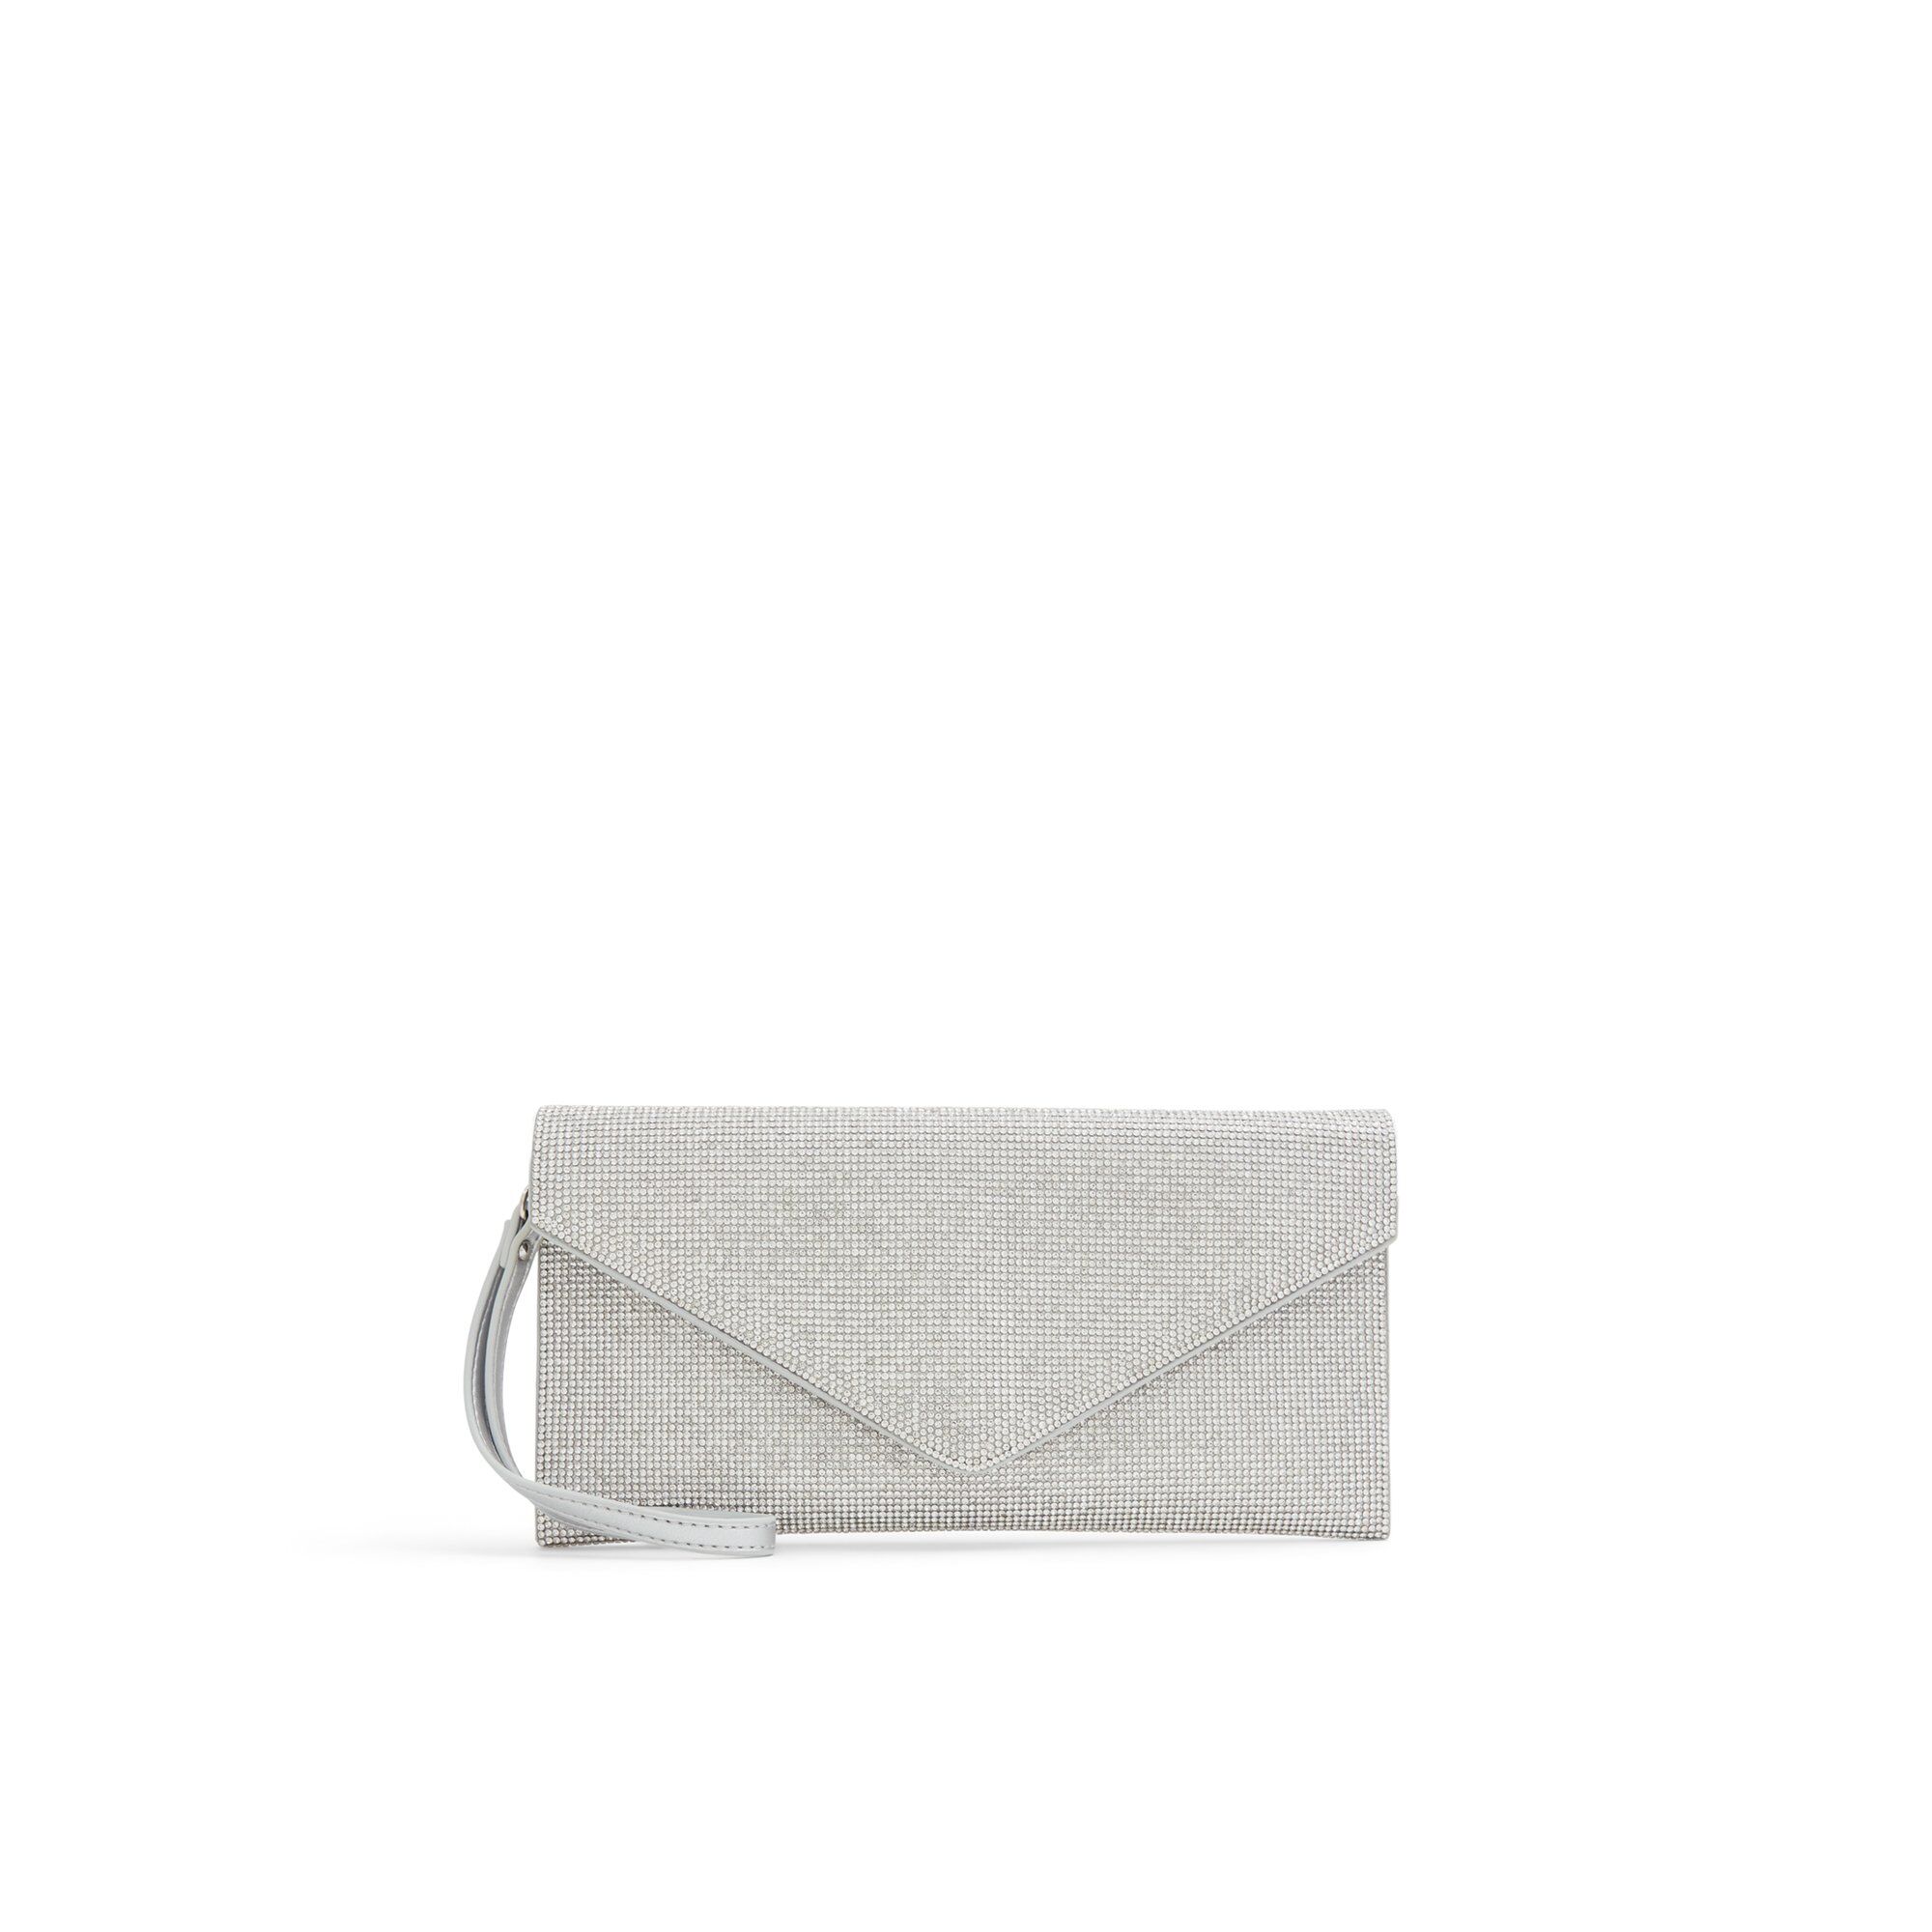 ALDO Mallasvex - Women's Clutches & Evening Bag Handbag - Silver